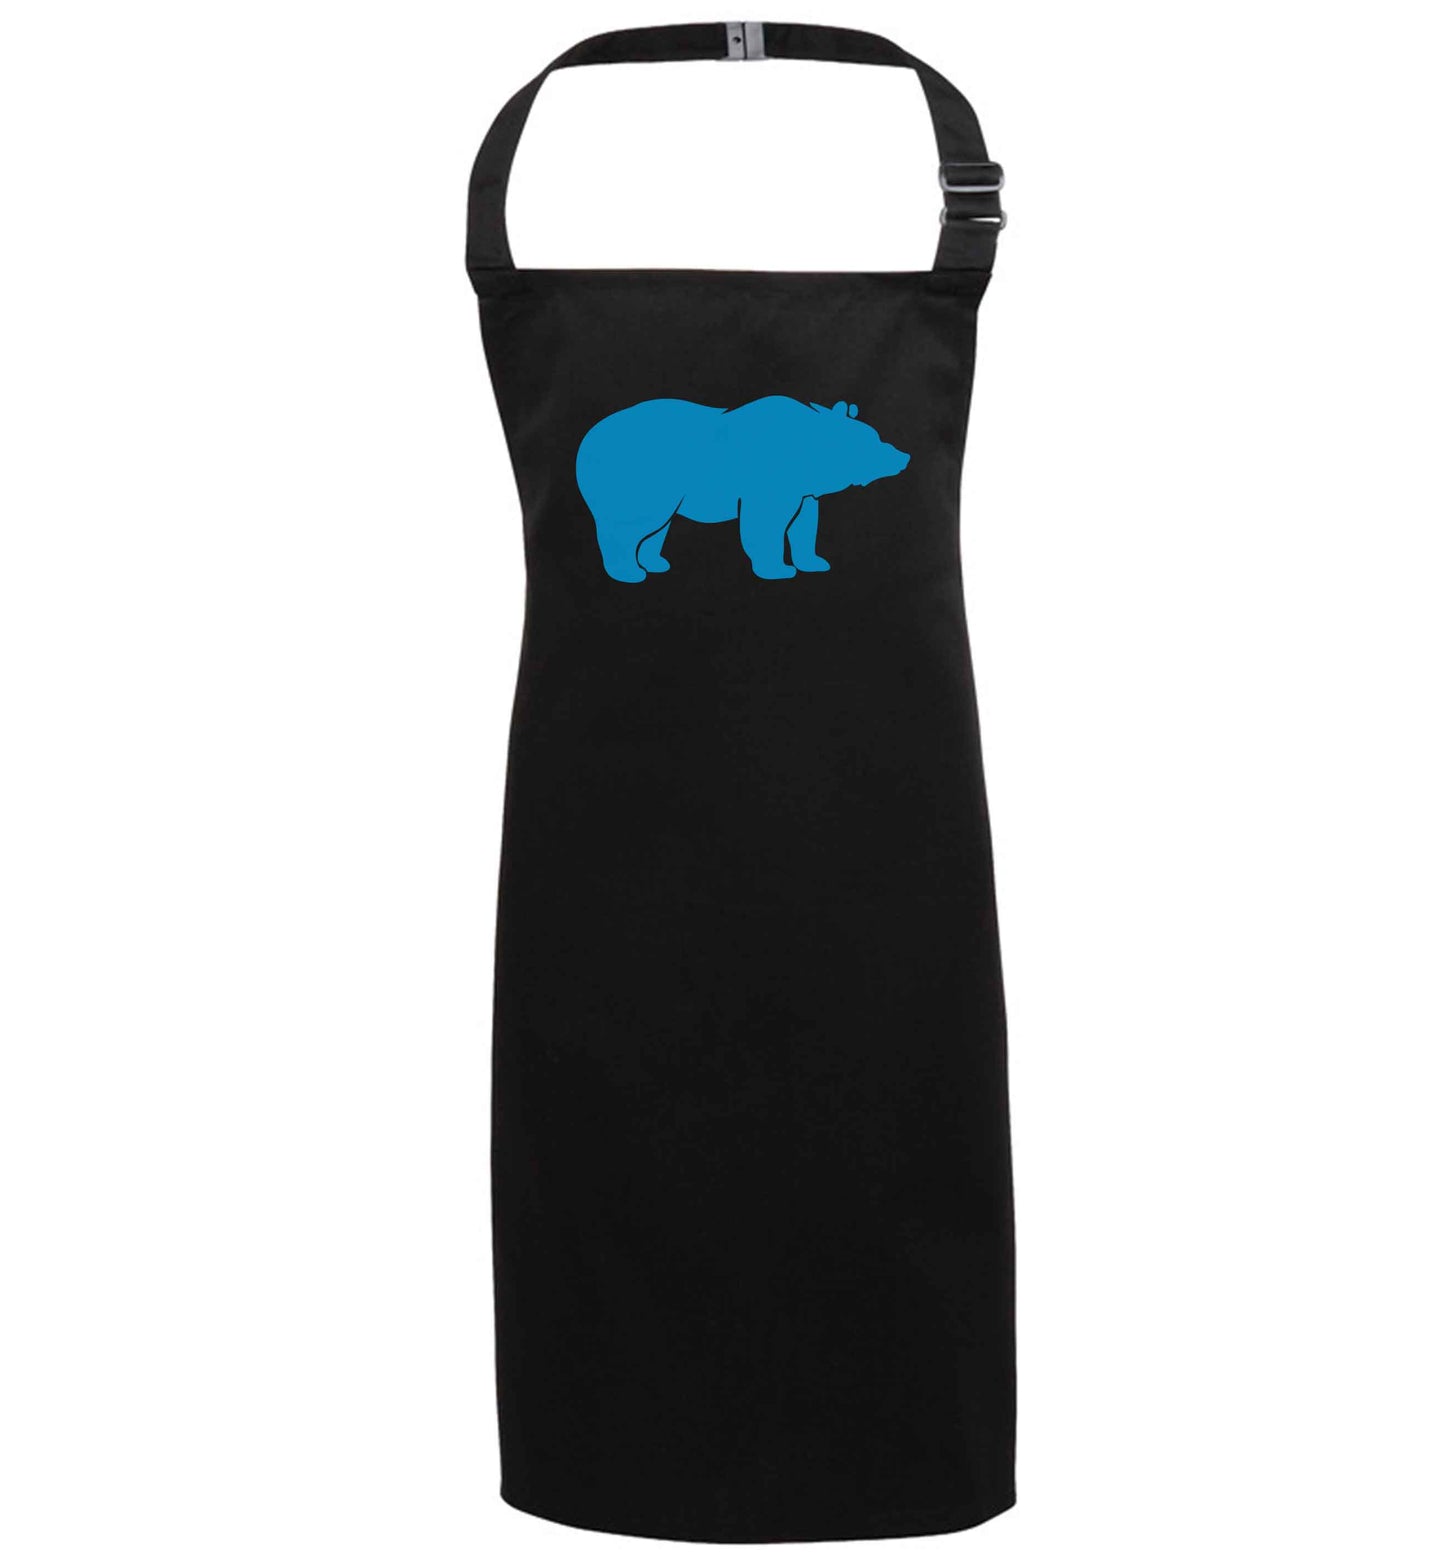 Blue bear black apron 7-10 years